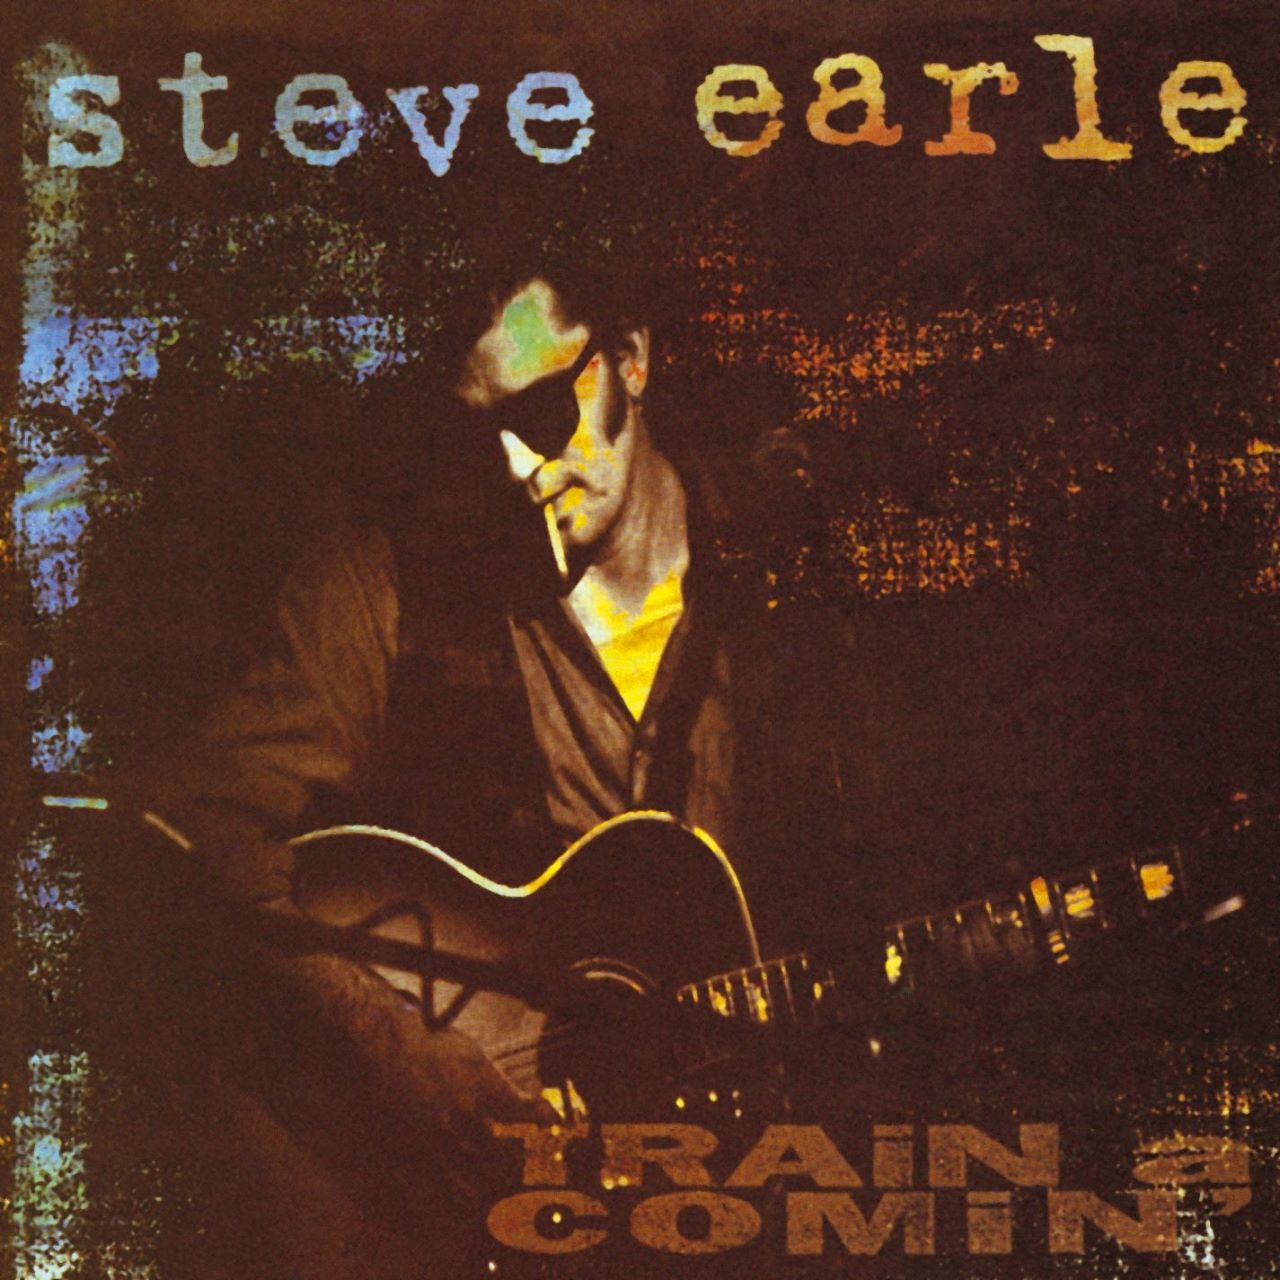 Steve Earle - Train A-comin’ cover album